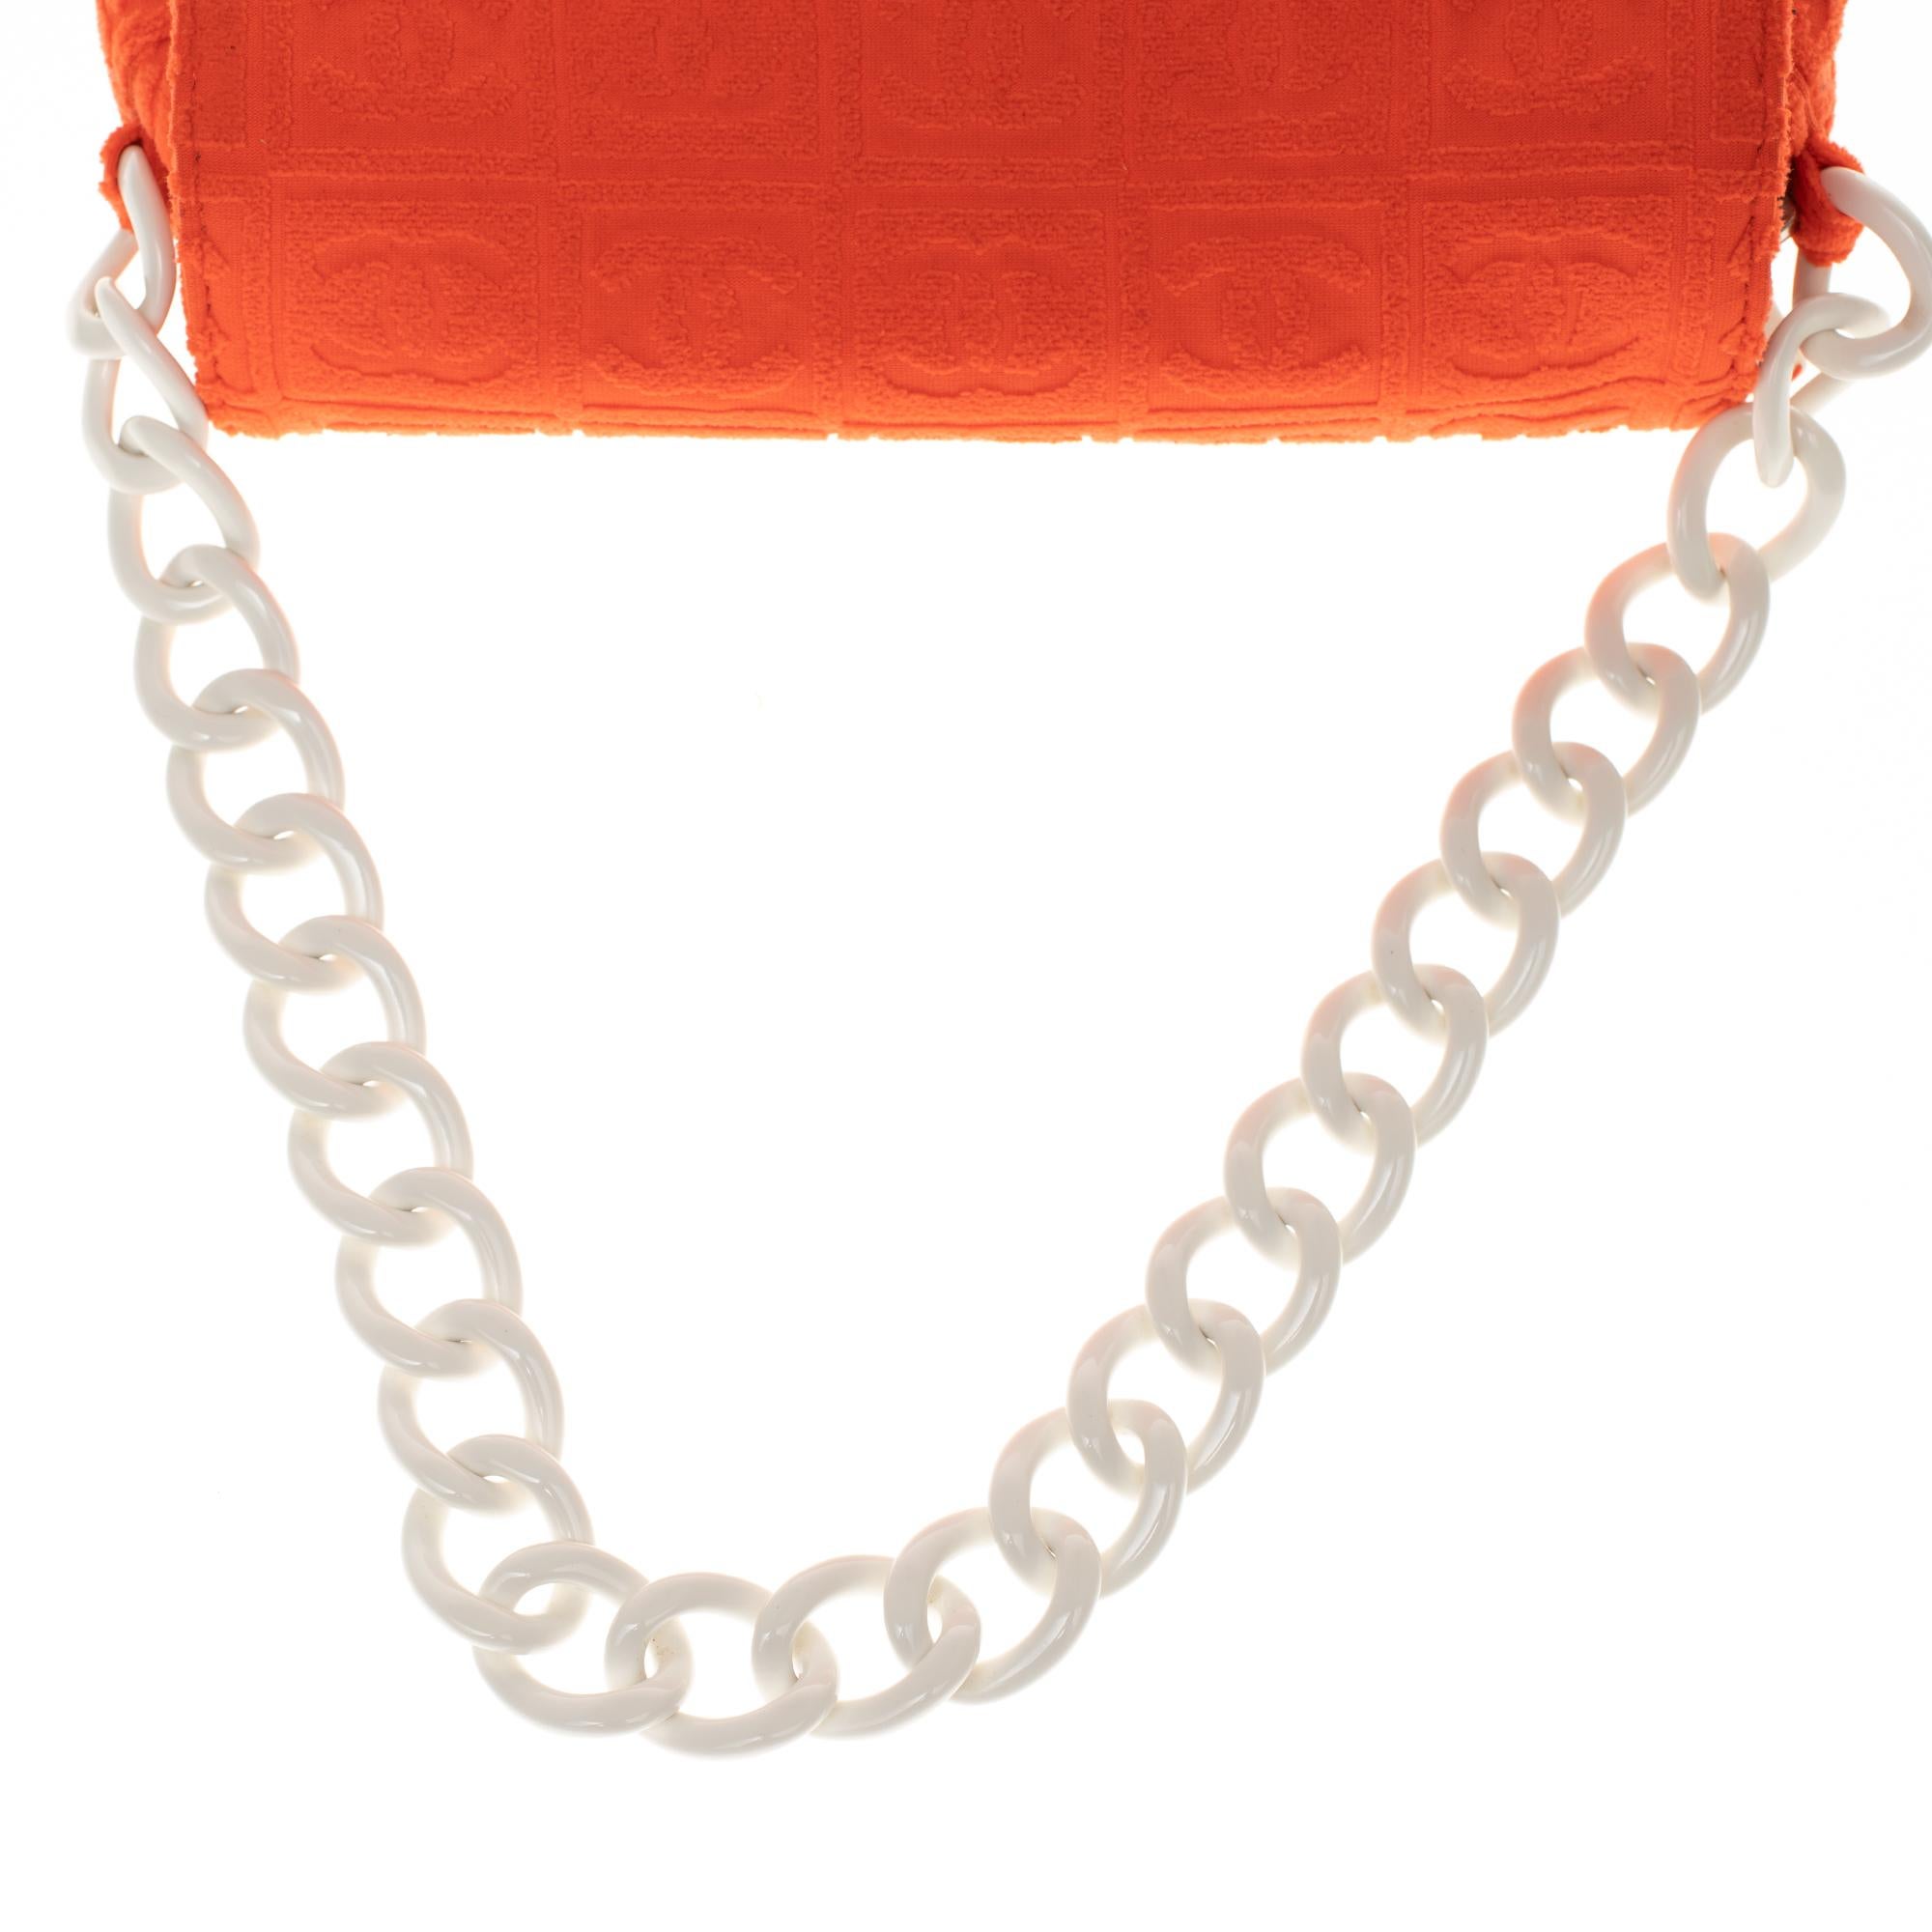 Women's Stunning Fancy Chanel Classic shoulder bag in orange cotton, white plastic chain